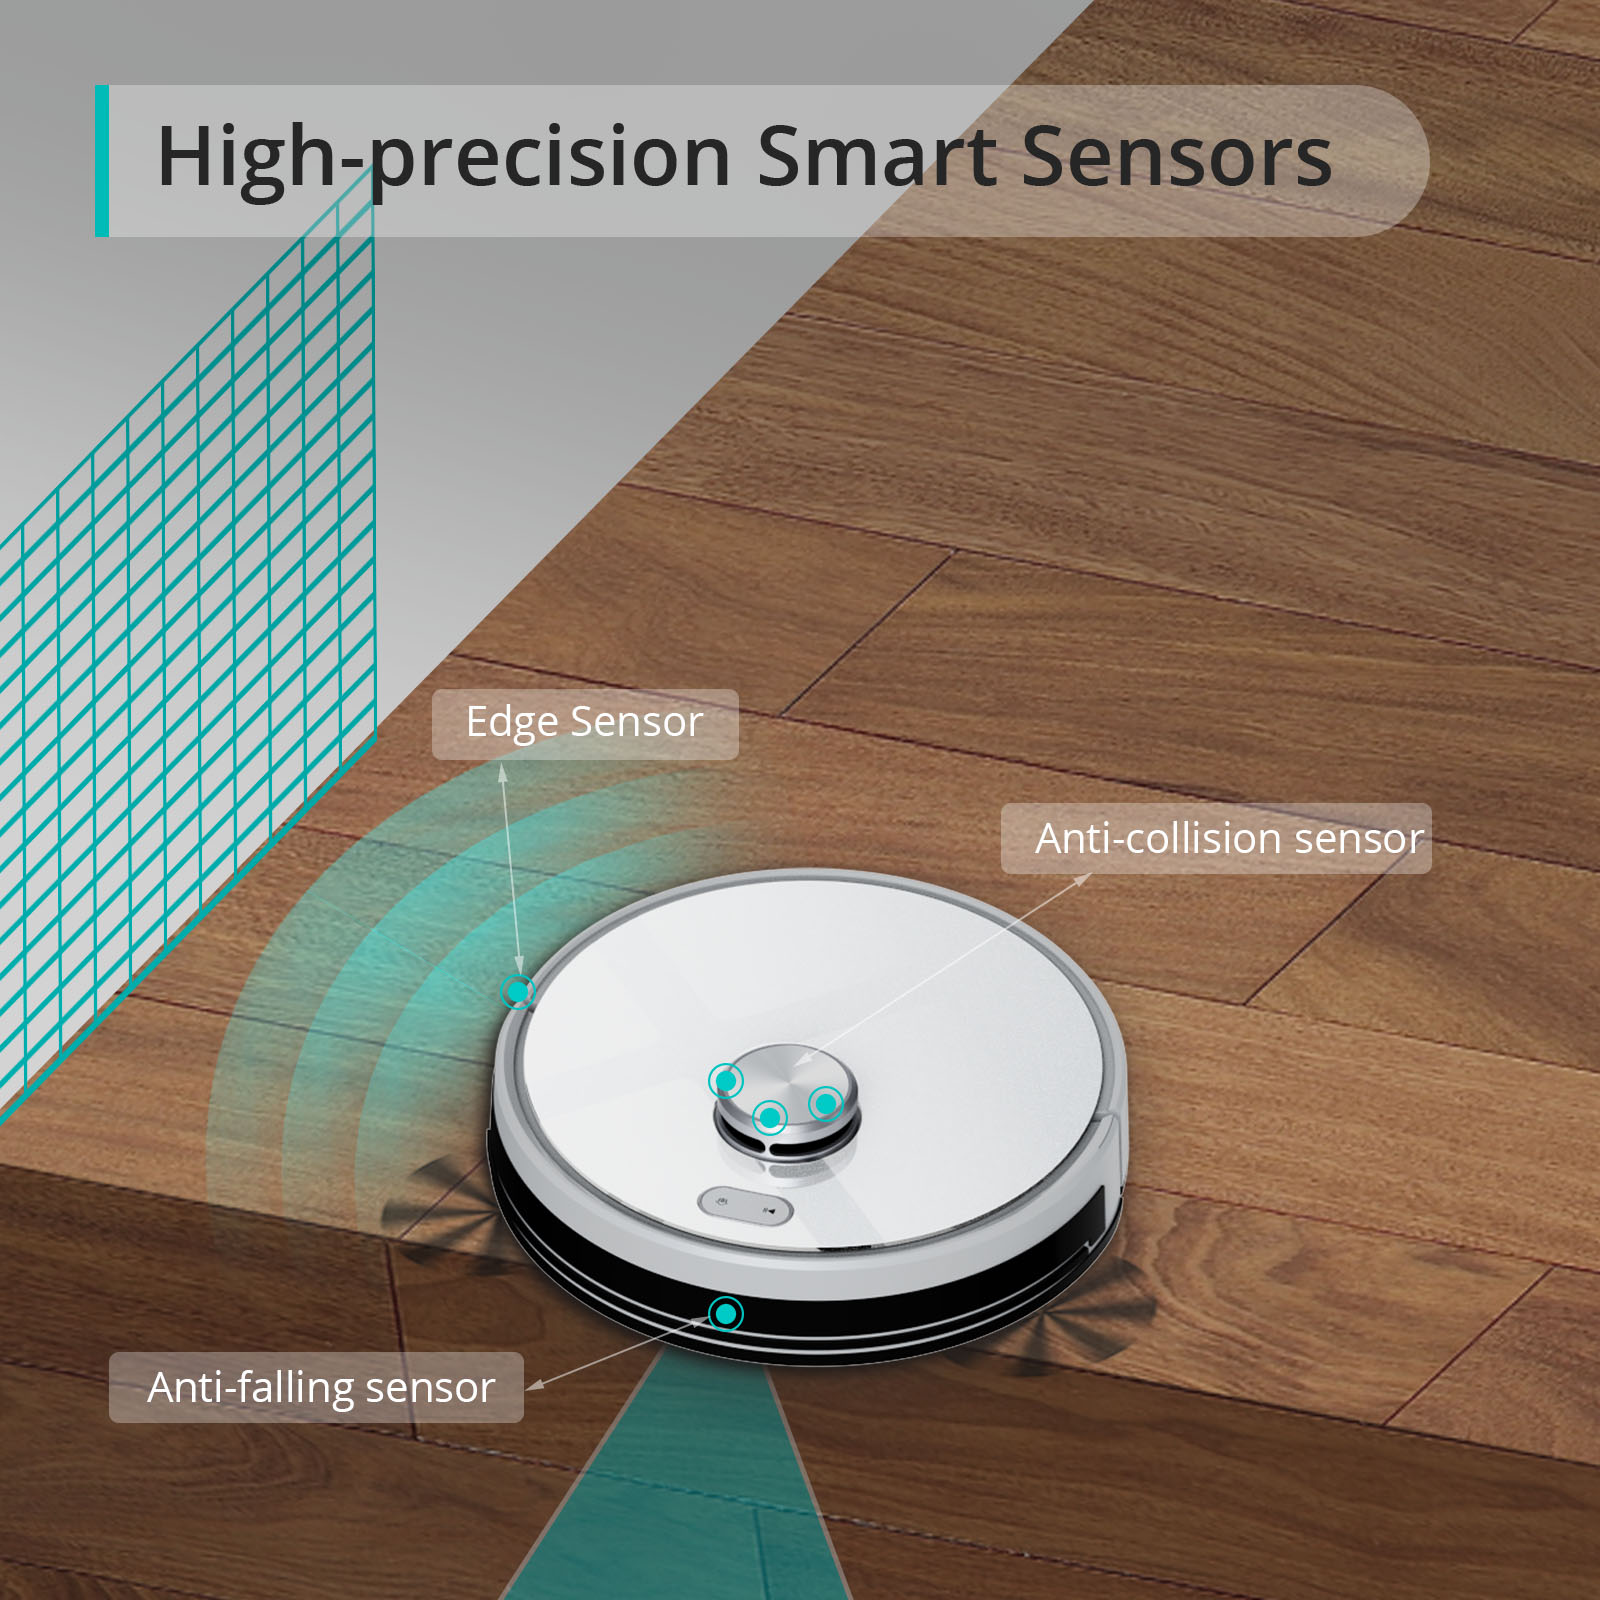 High-precision Smart Sensors